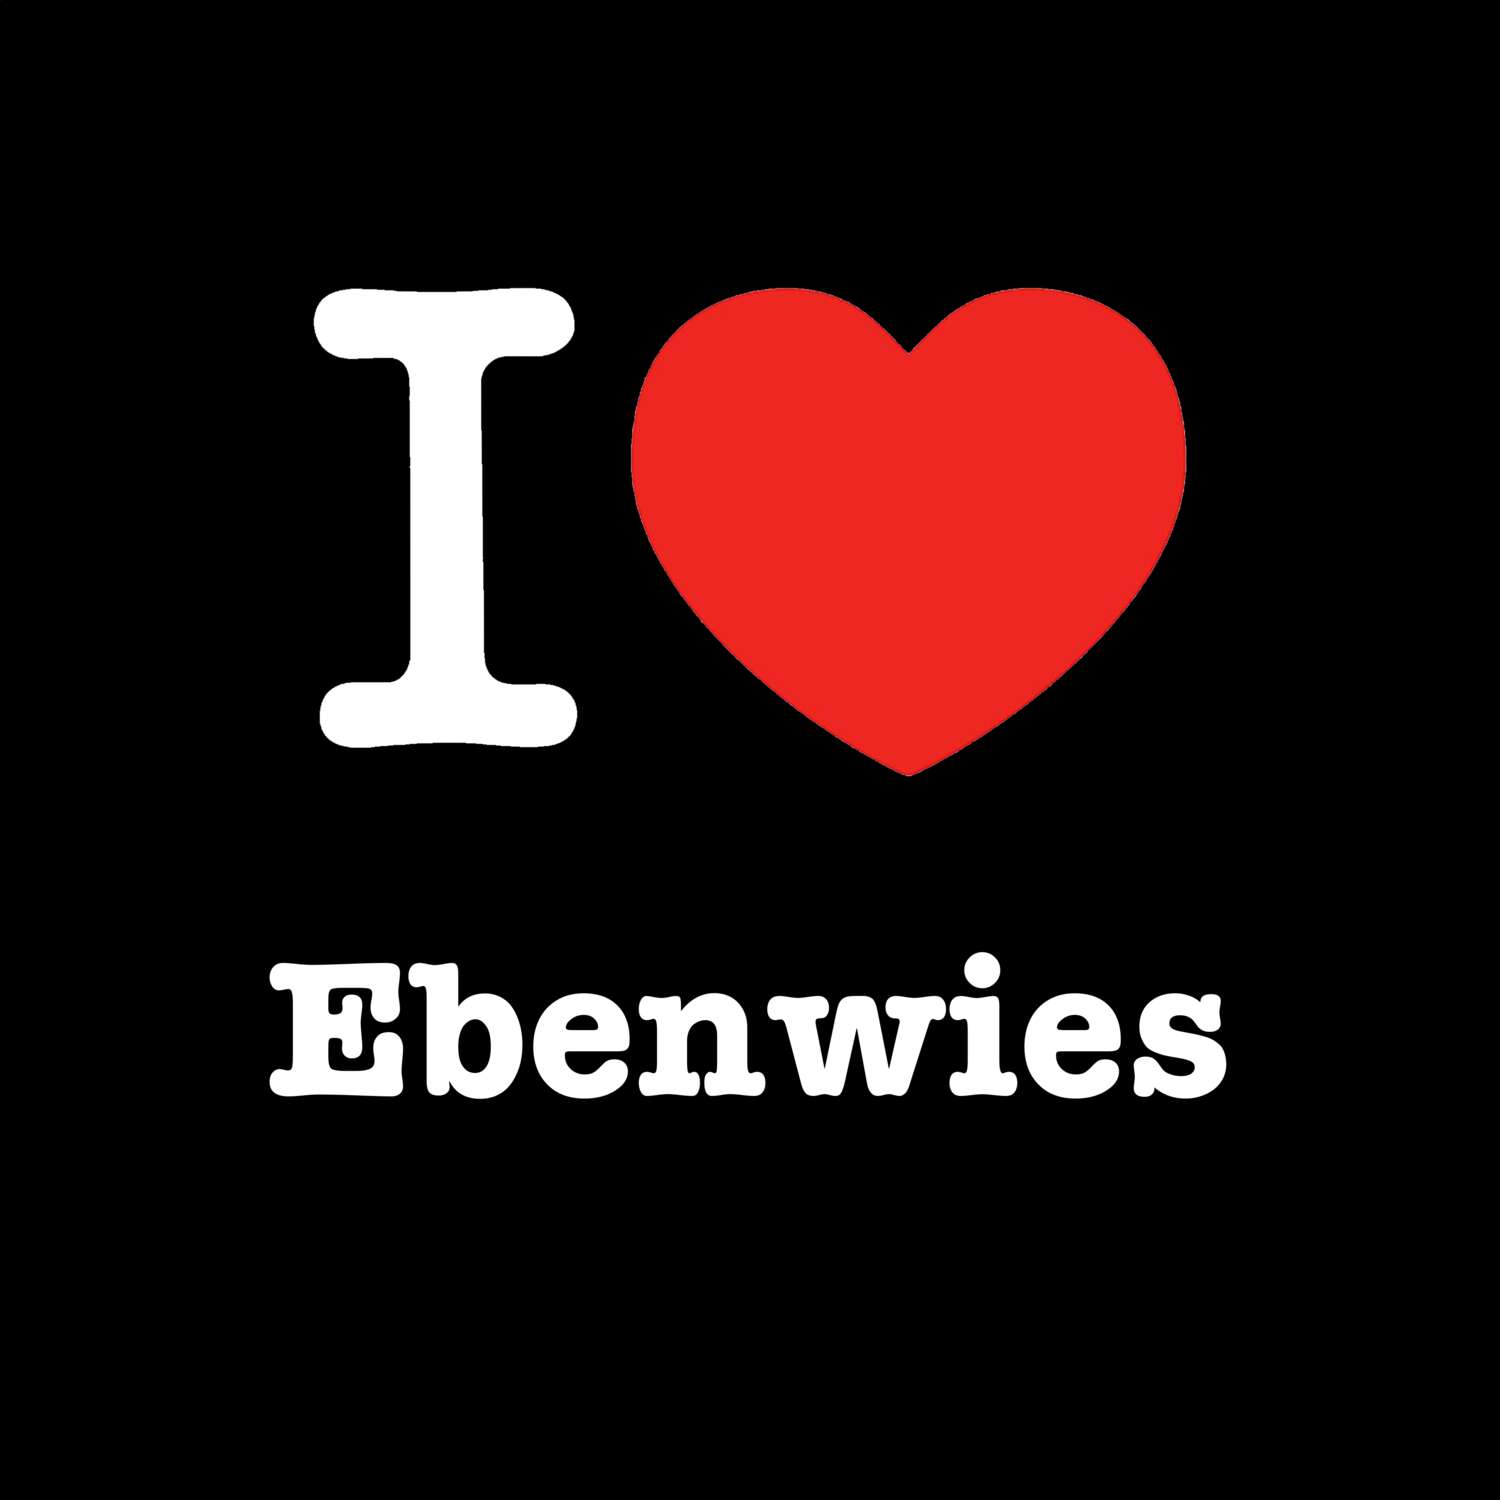 Ebenwies T-Shirt »I love«